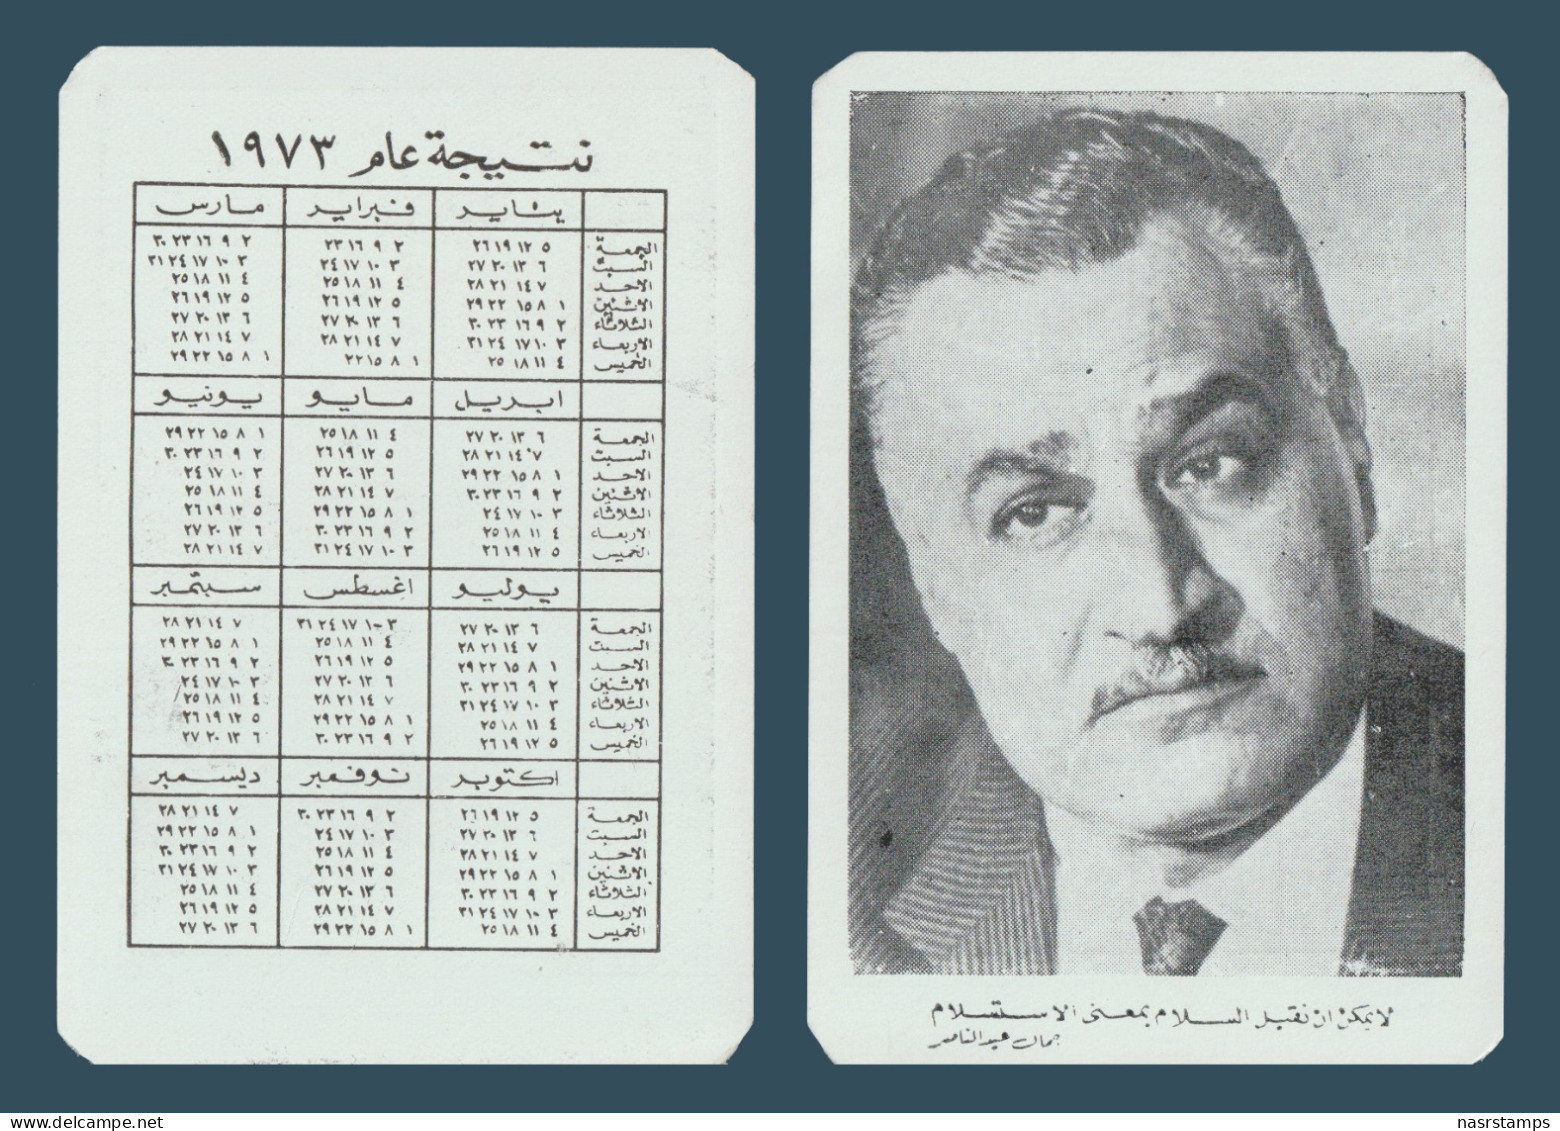 Egypt - 1973 - Calendar - Gamal Abd El Nasser - Ongebruikt